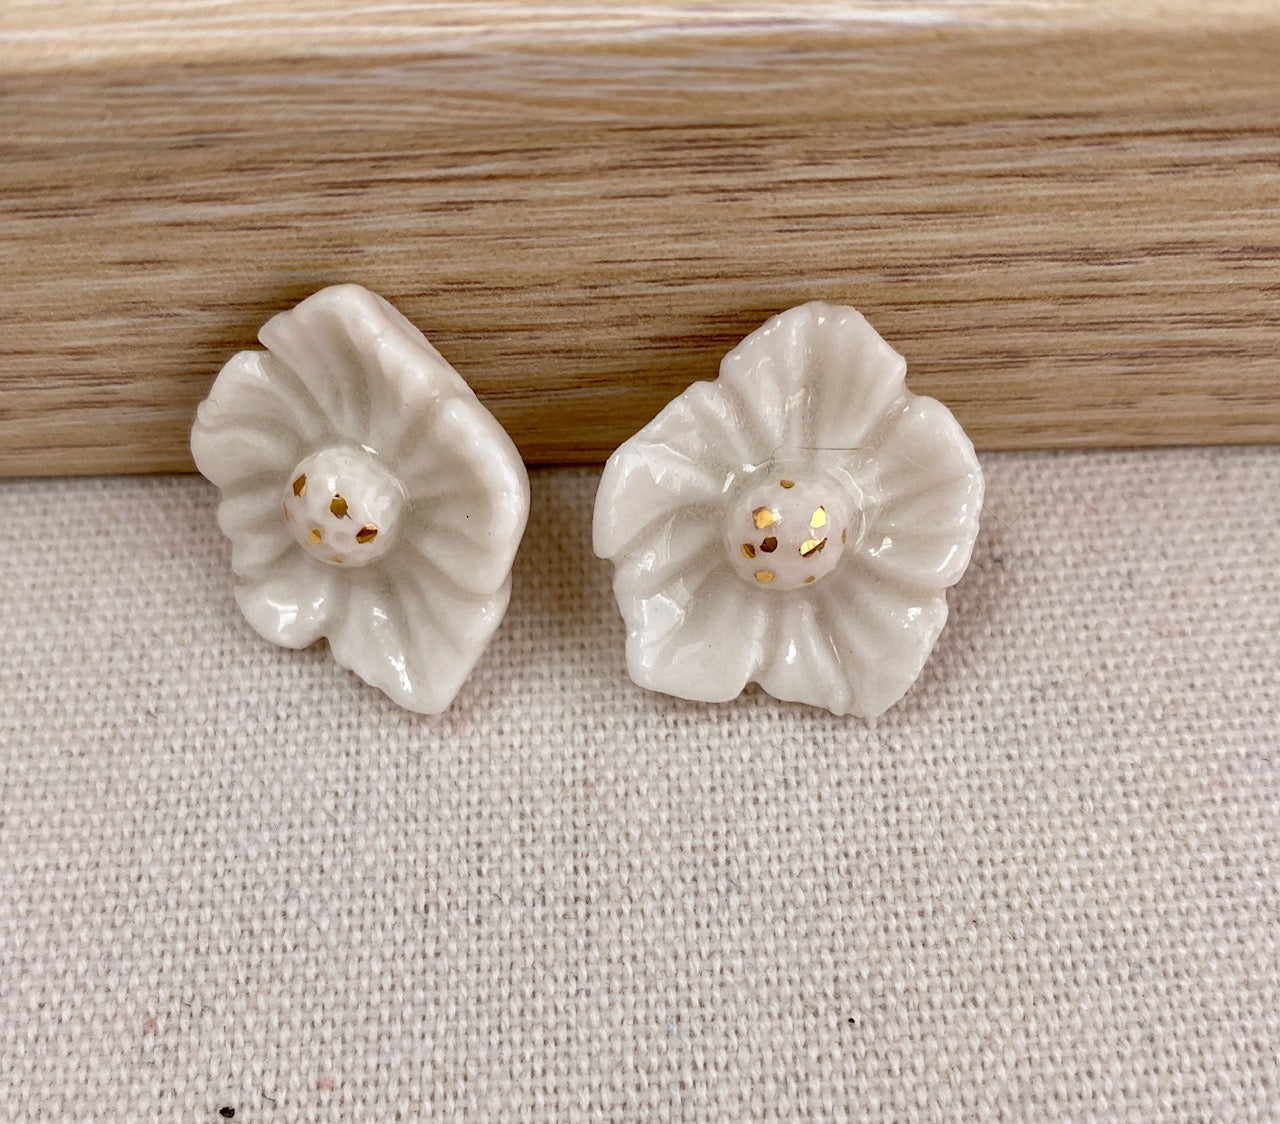 Dogwood flower shaped porcelain earring. 24k gold accents.